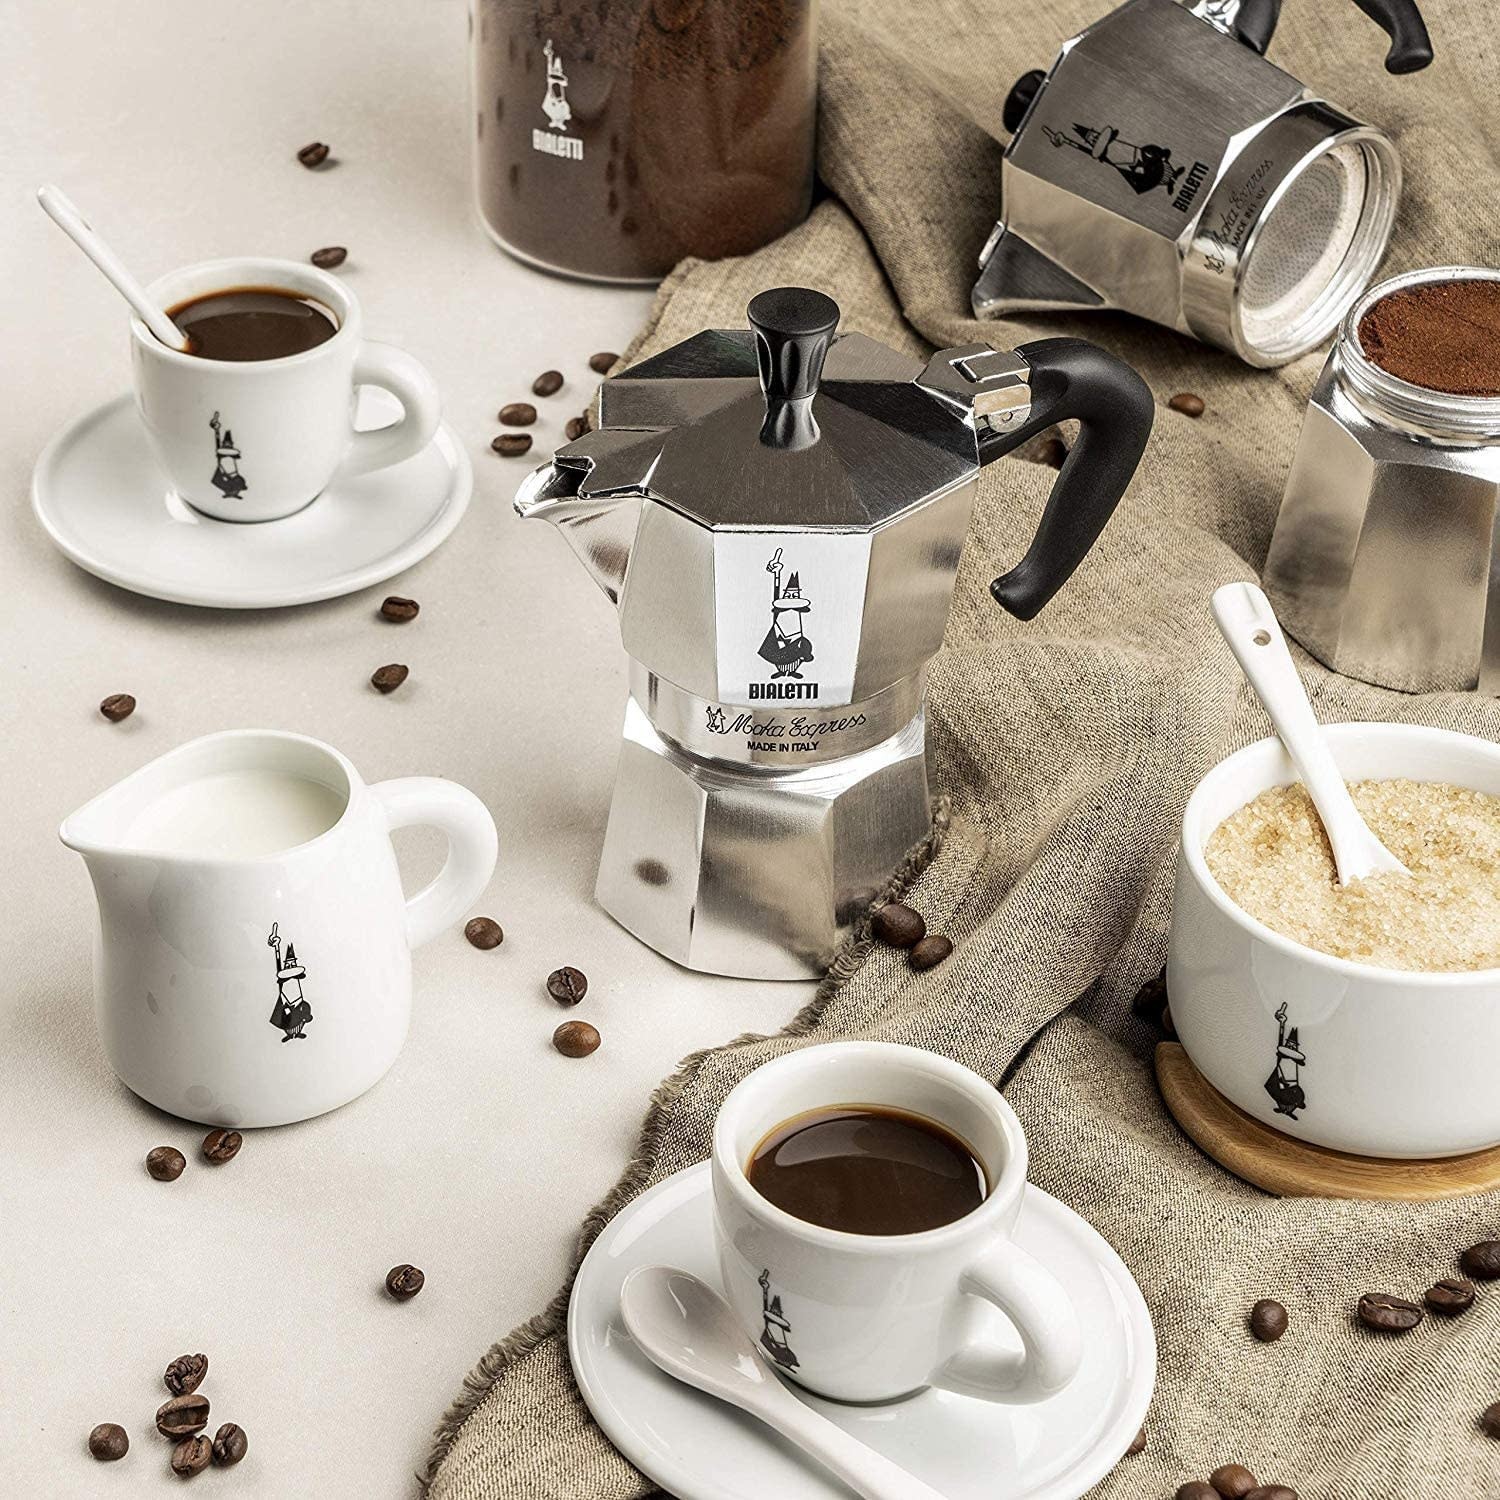 Bialetti Moka Express 2 cups coffee maker